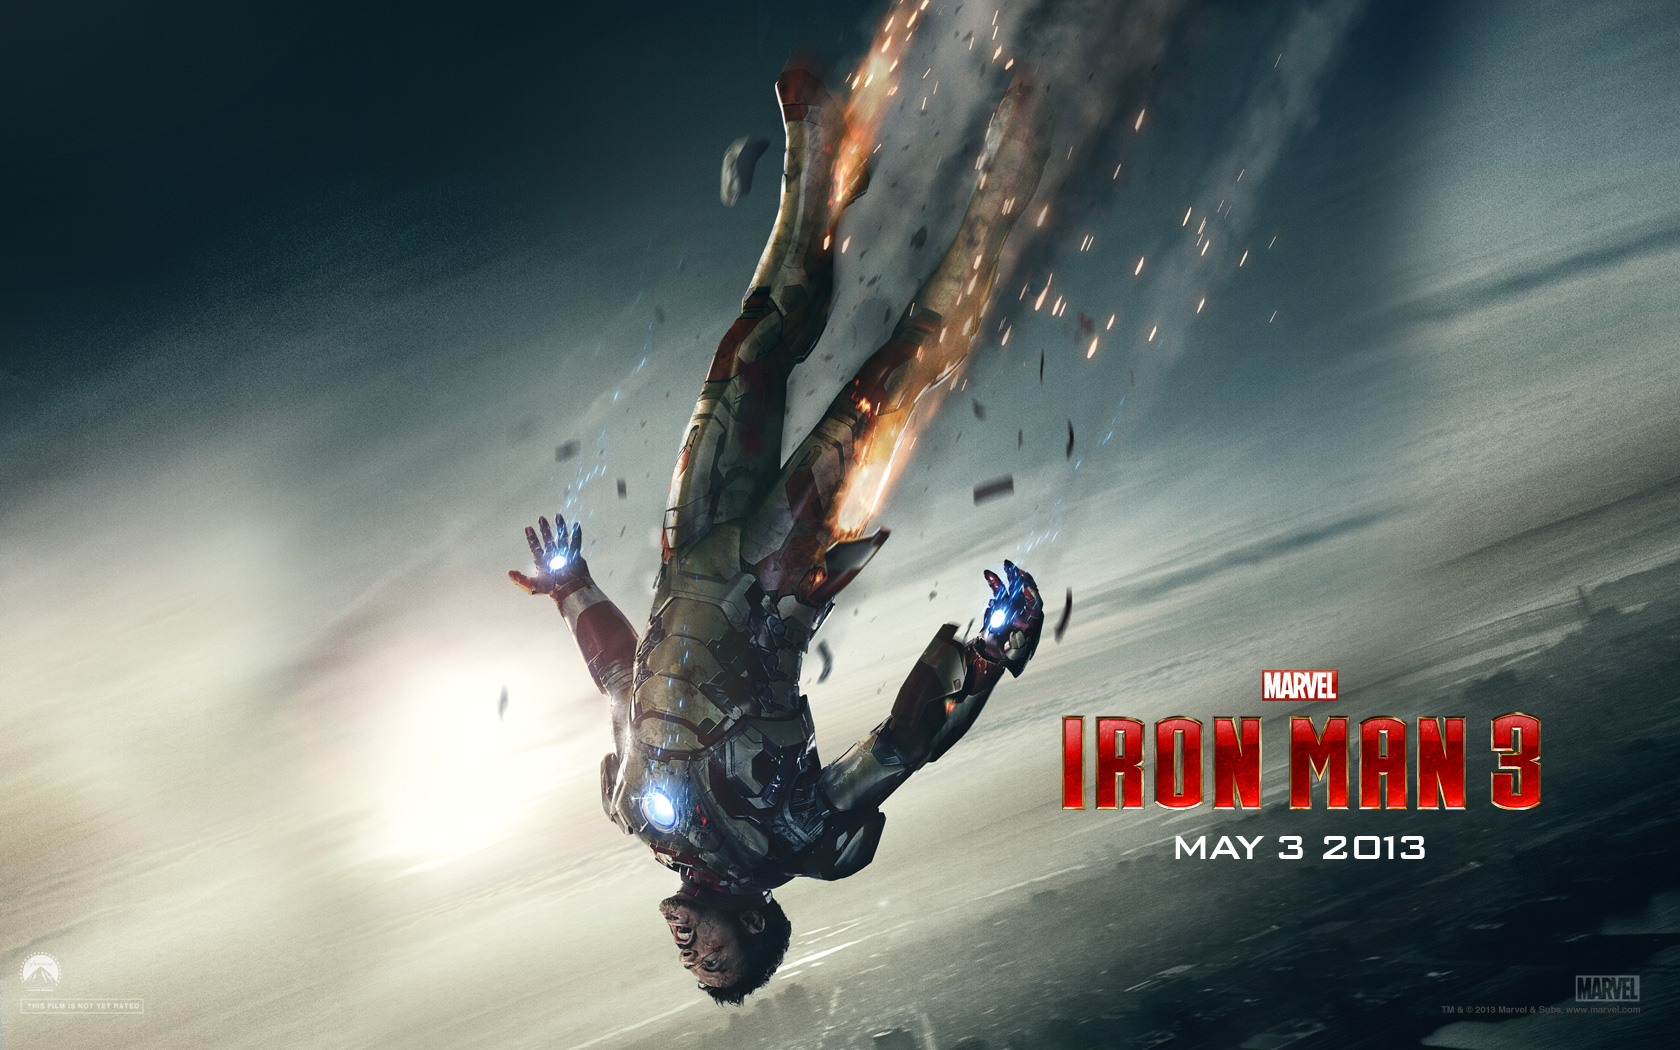 Movie News: No more Iron Man after Iron Man 3?